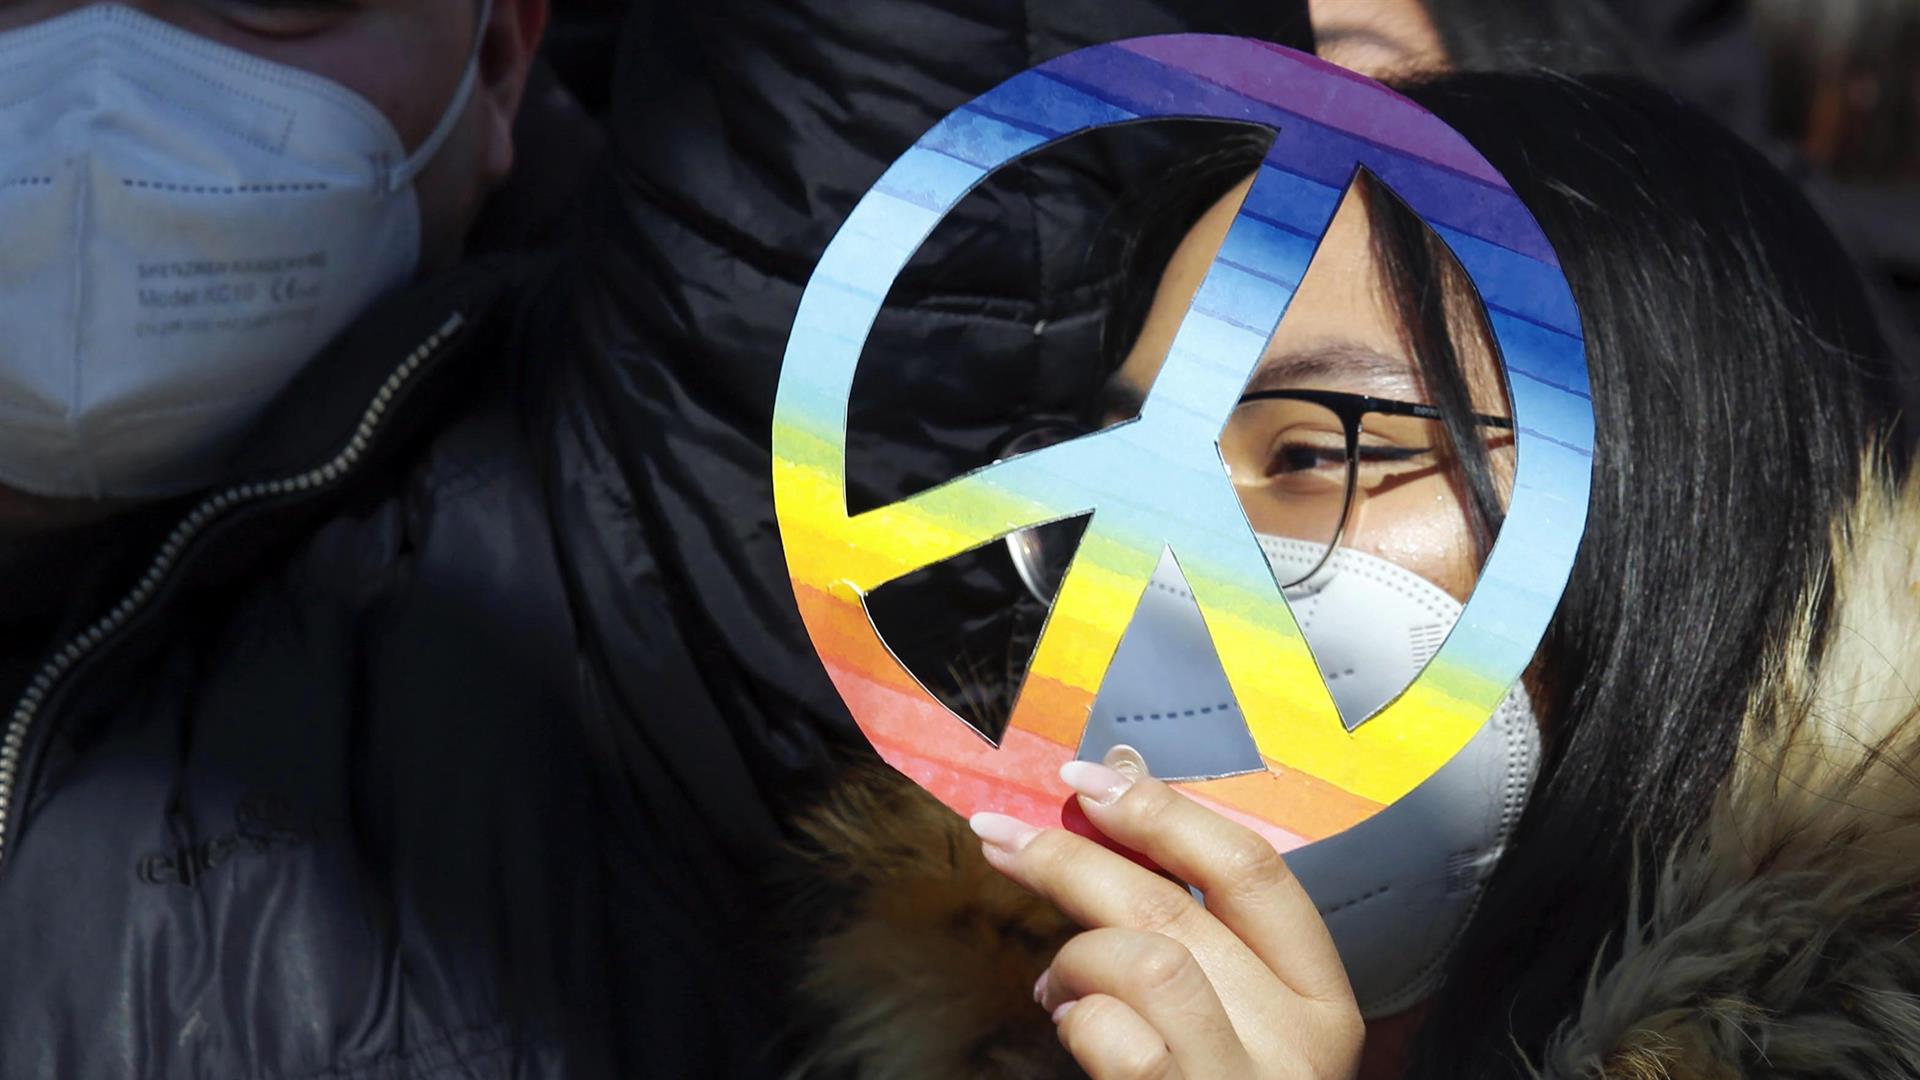 Pace Guerra Ucraina24 Remo Casilli:Sintesi